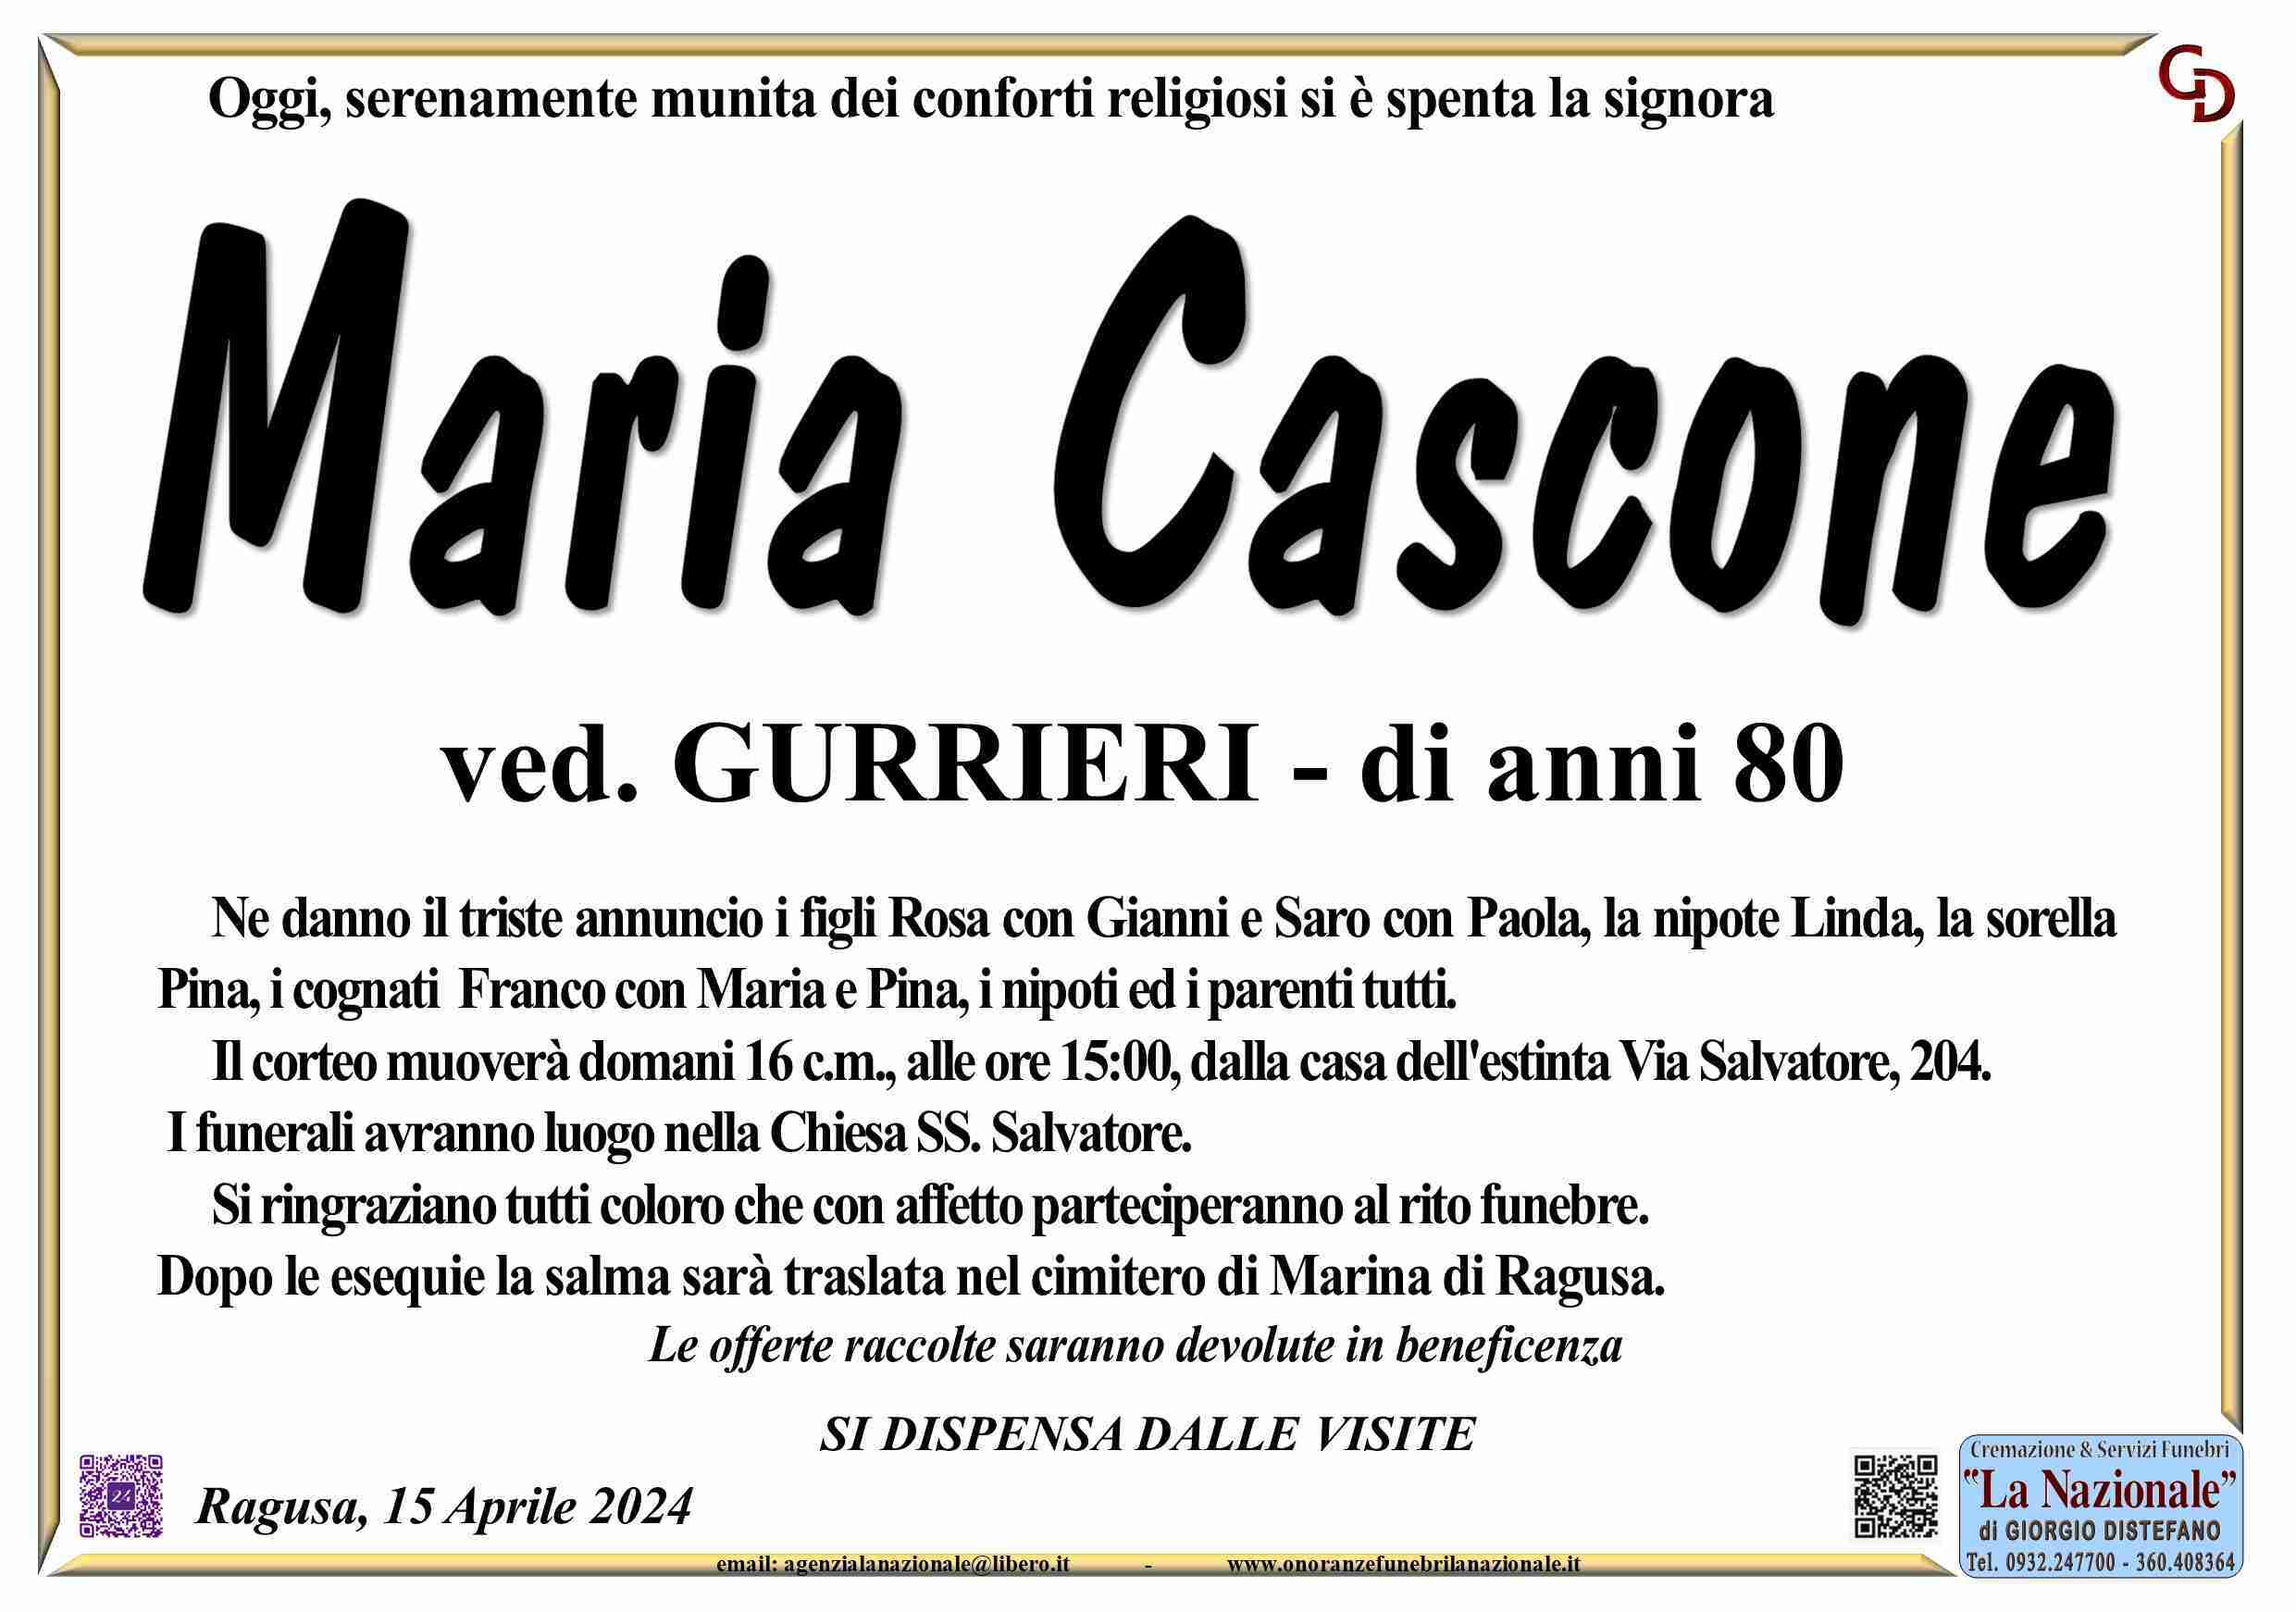 Maria Cascone